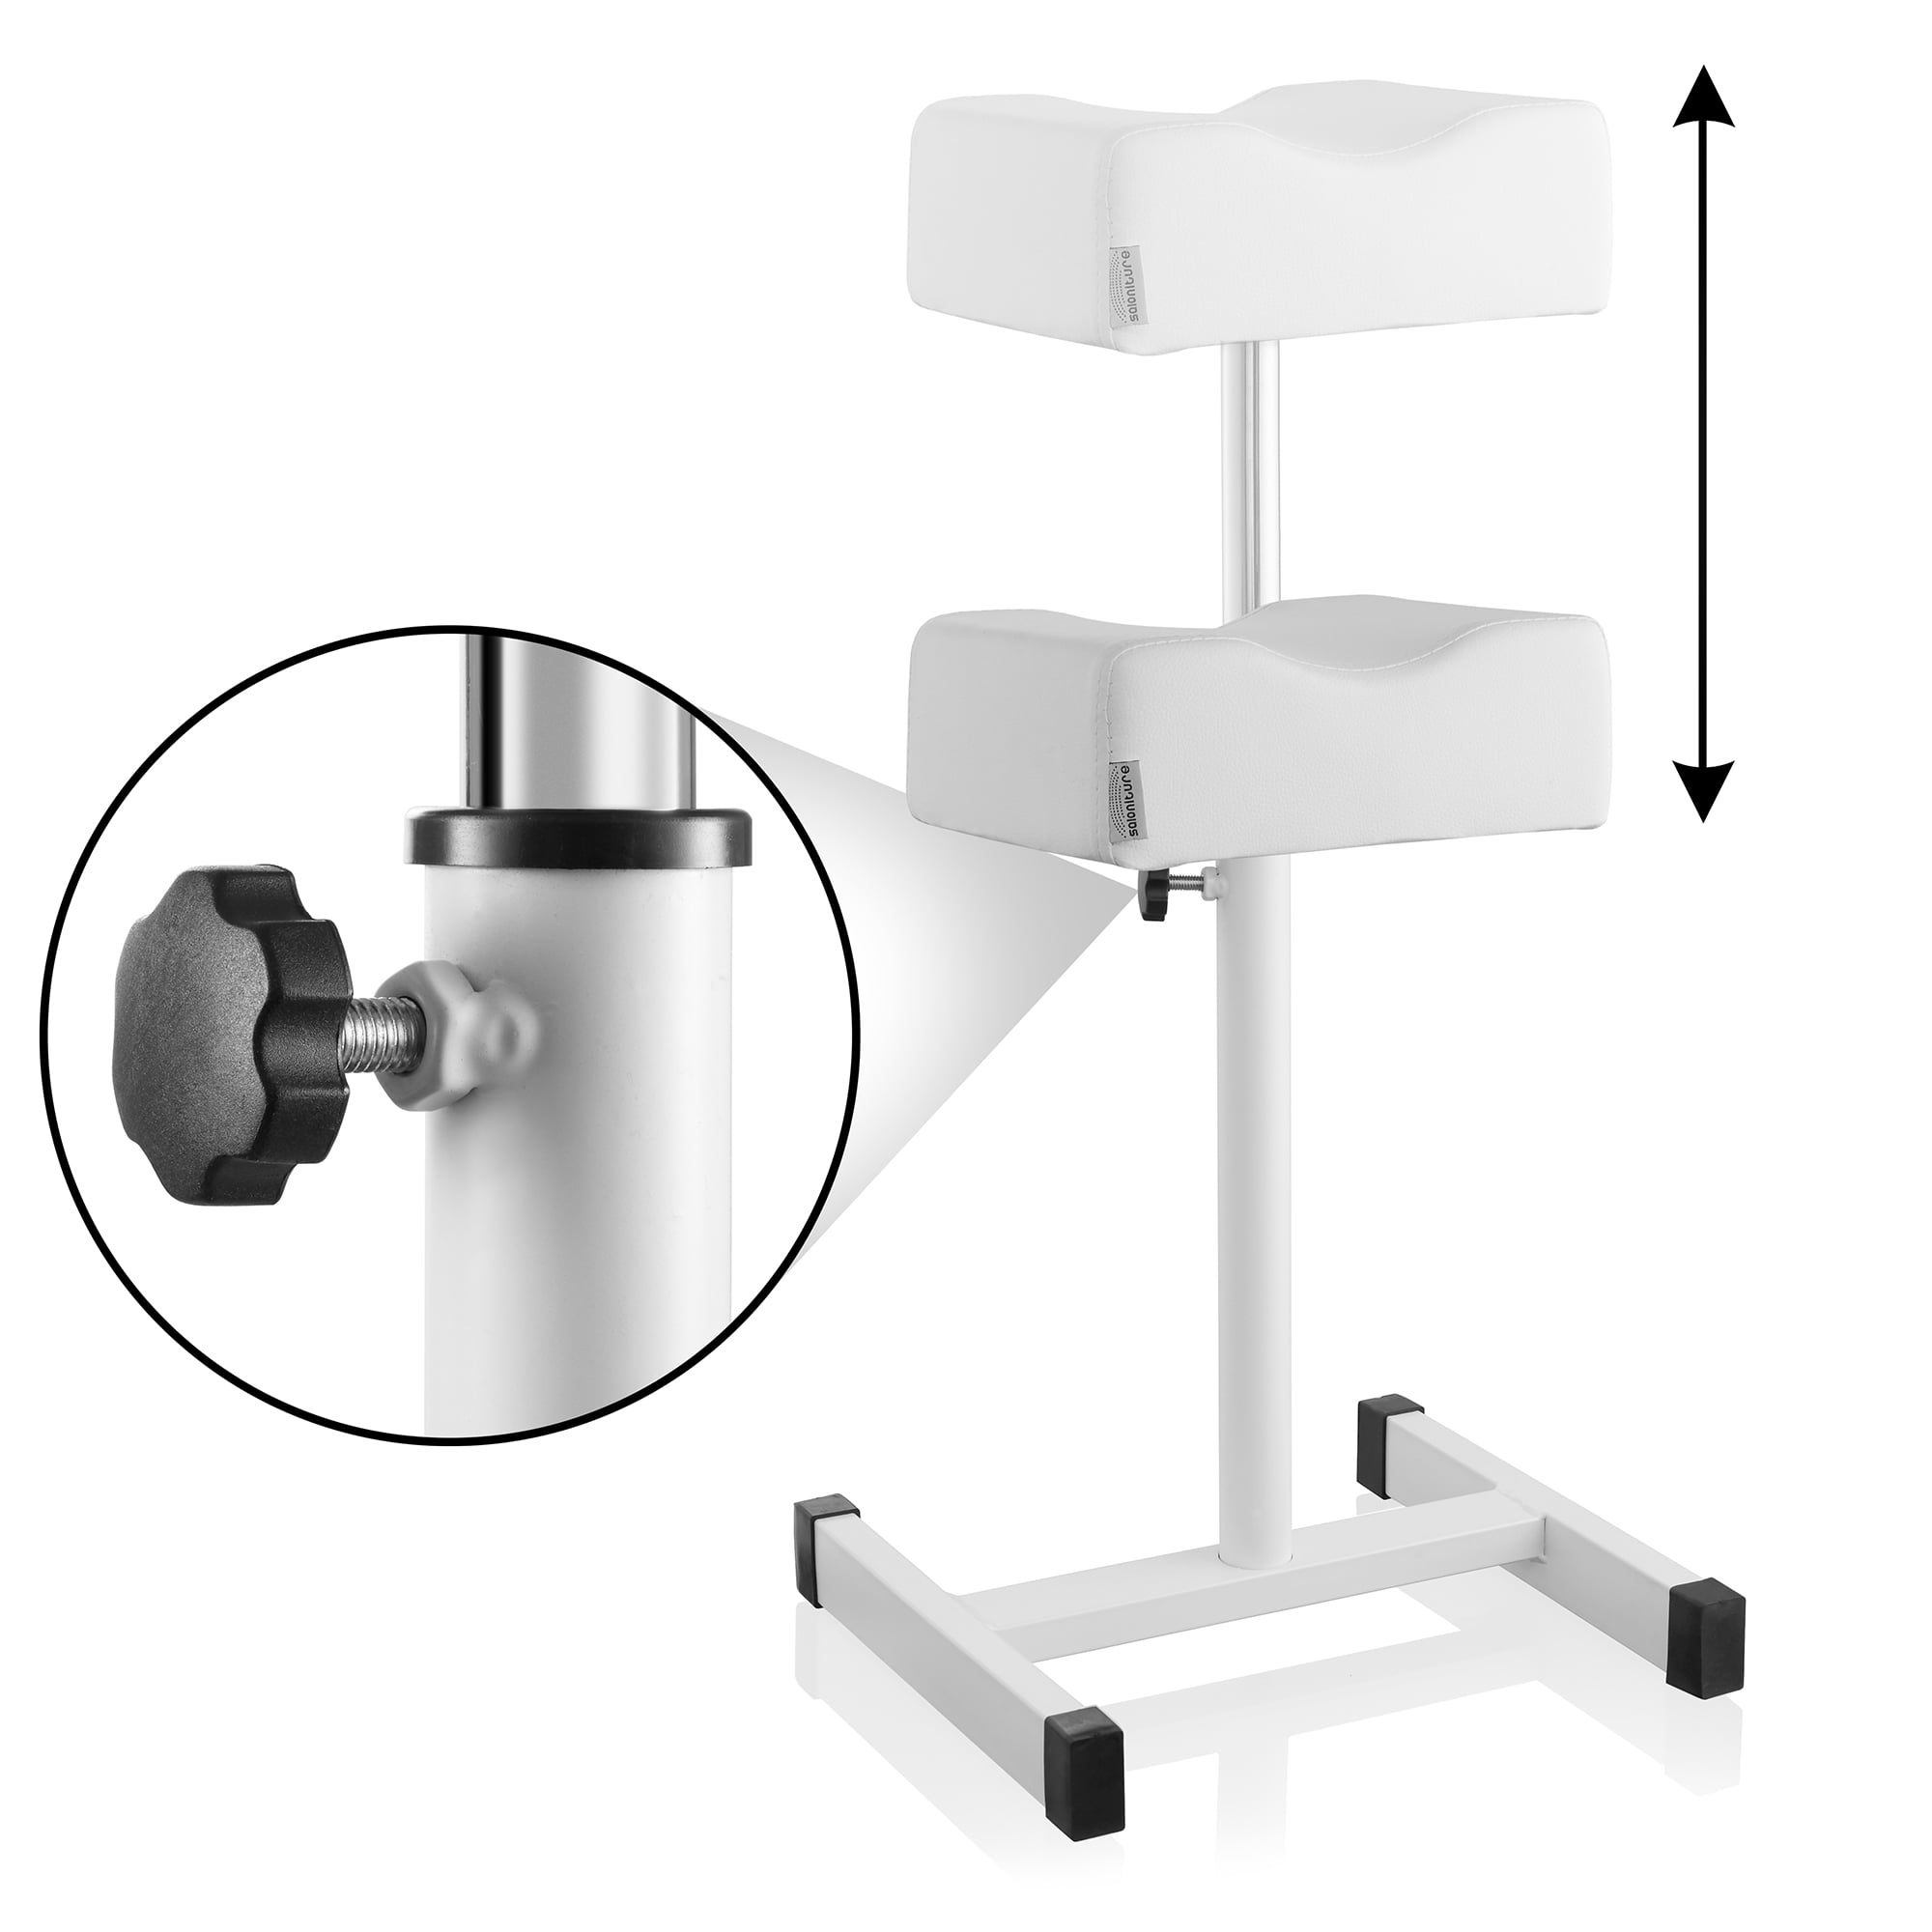 SABUIDDS Pedicure Foot Rest Chair,Swivel Adjustable Pedicure Stool for Spa  Beauty Salon Studio Equipment Supplies (White)